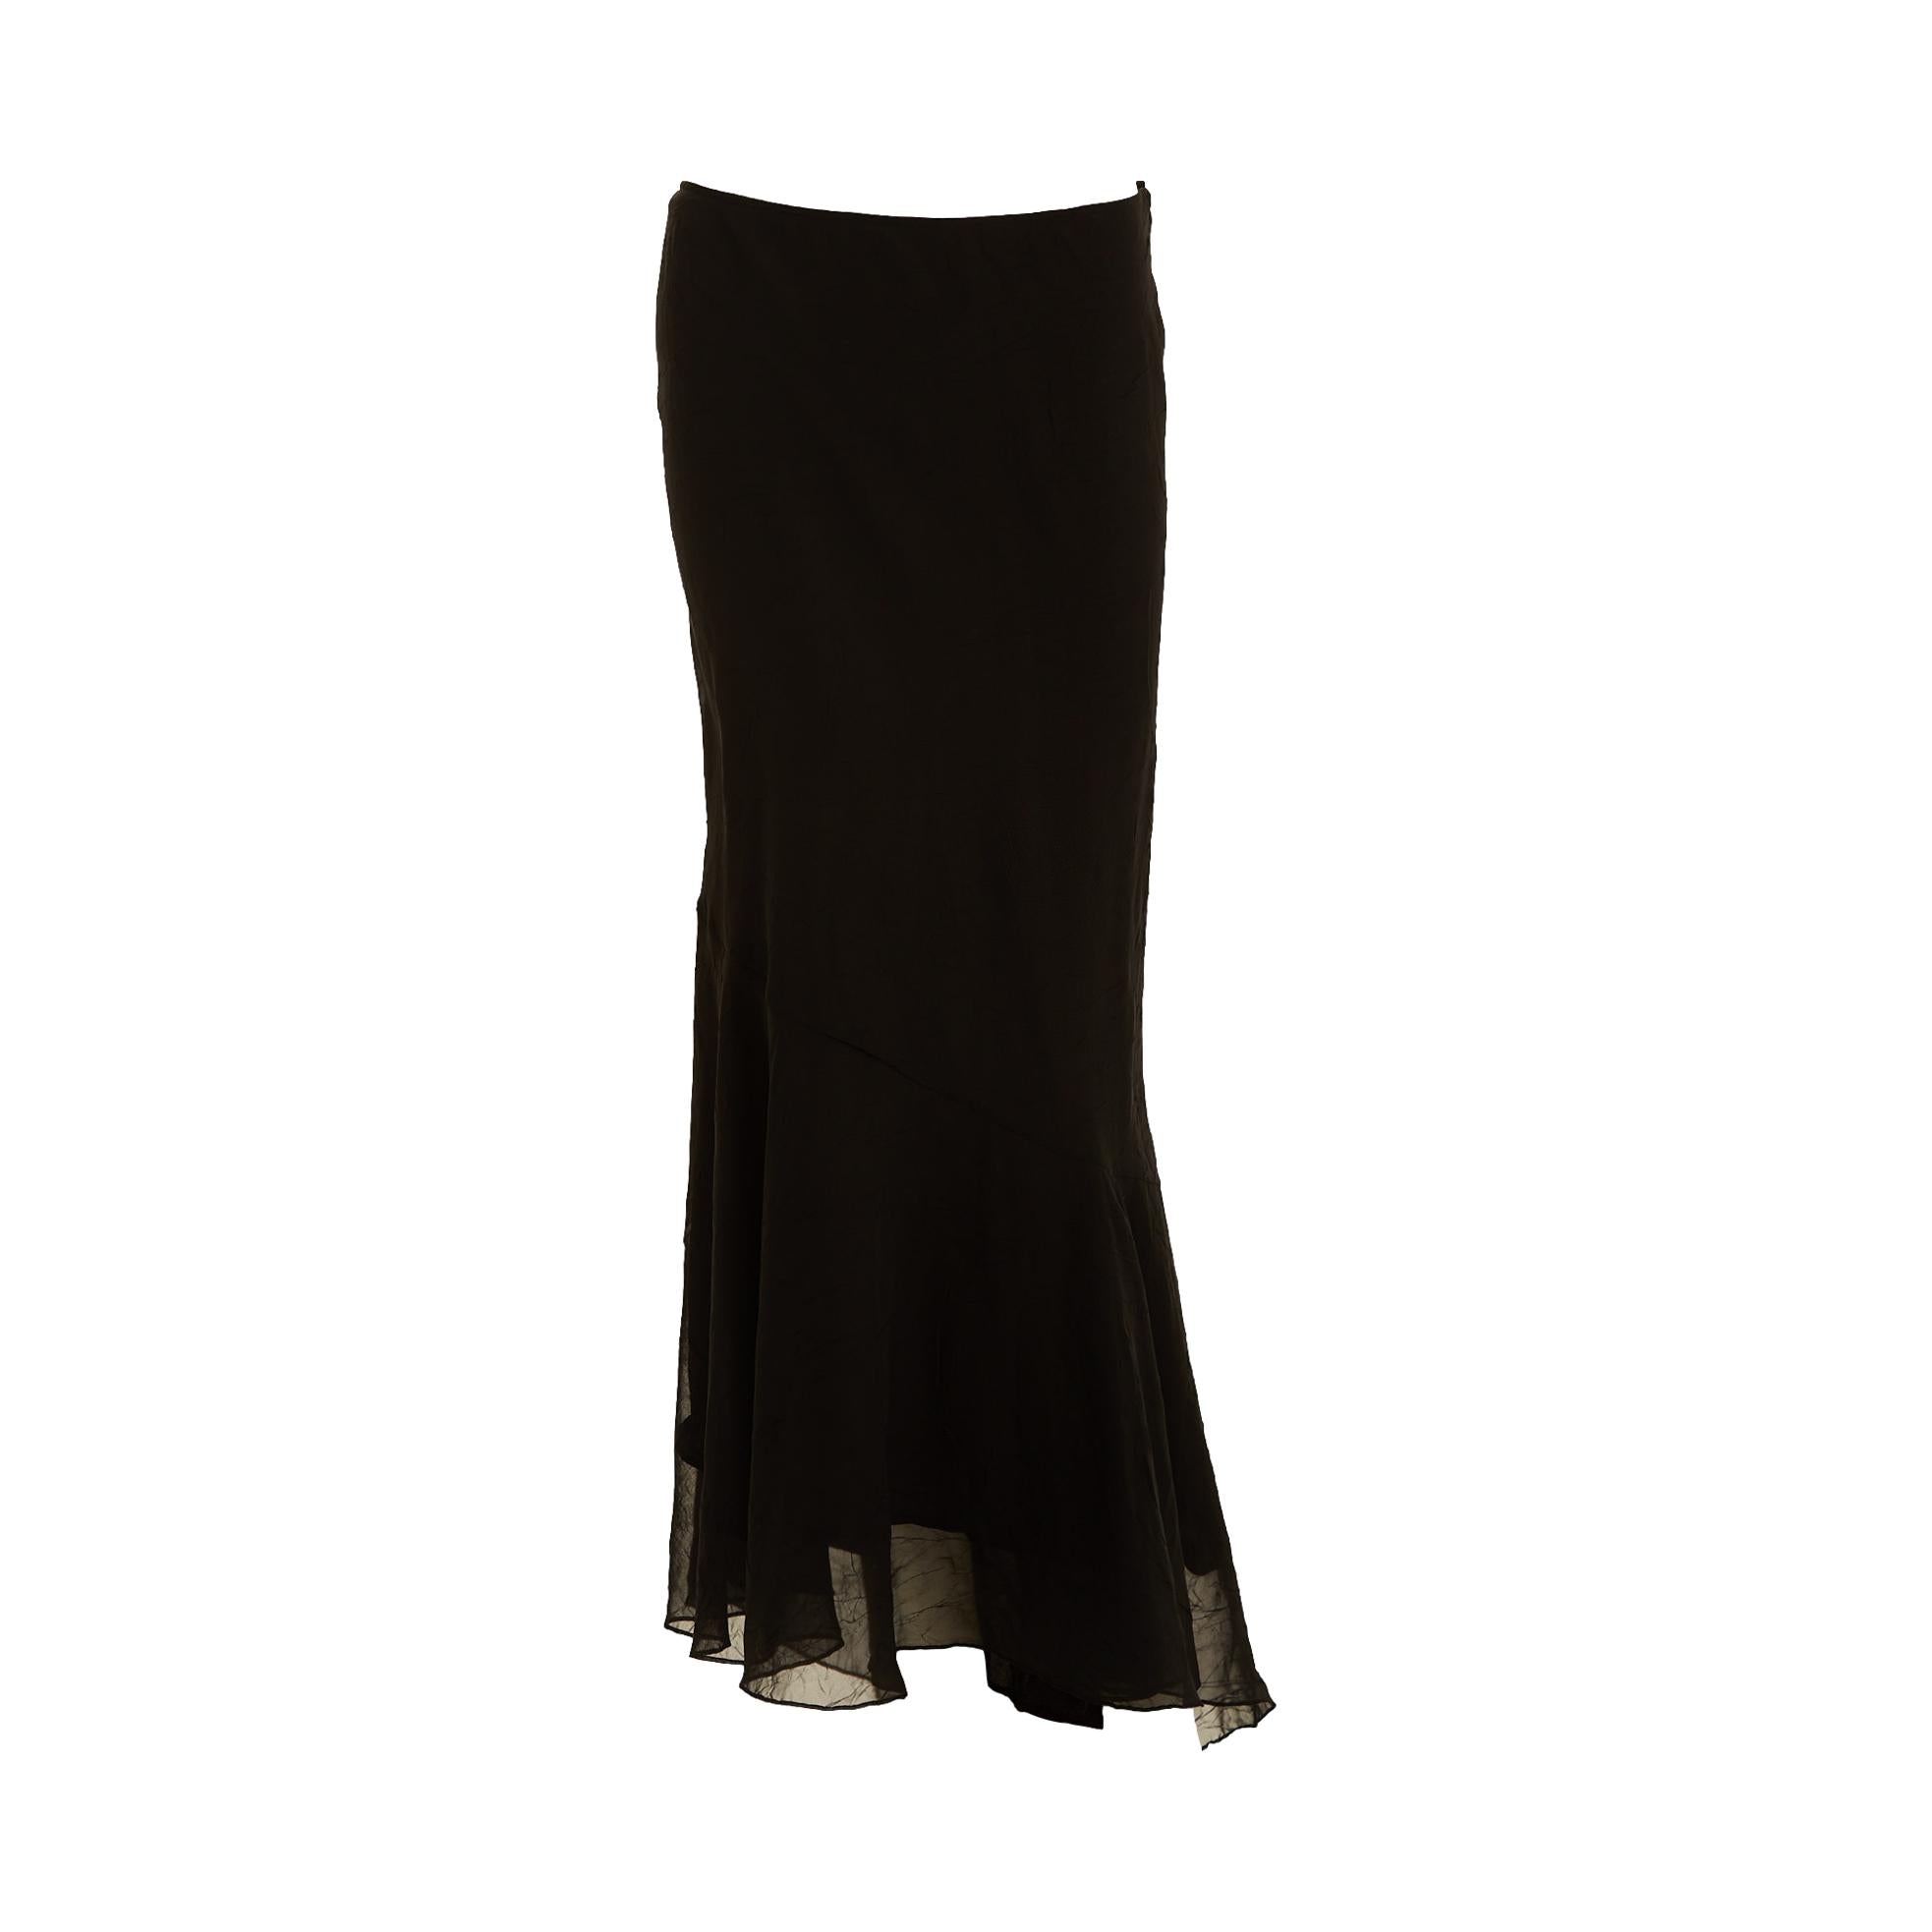 Jean Paul Gaultier Black Textured Skirt